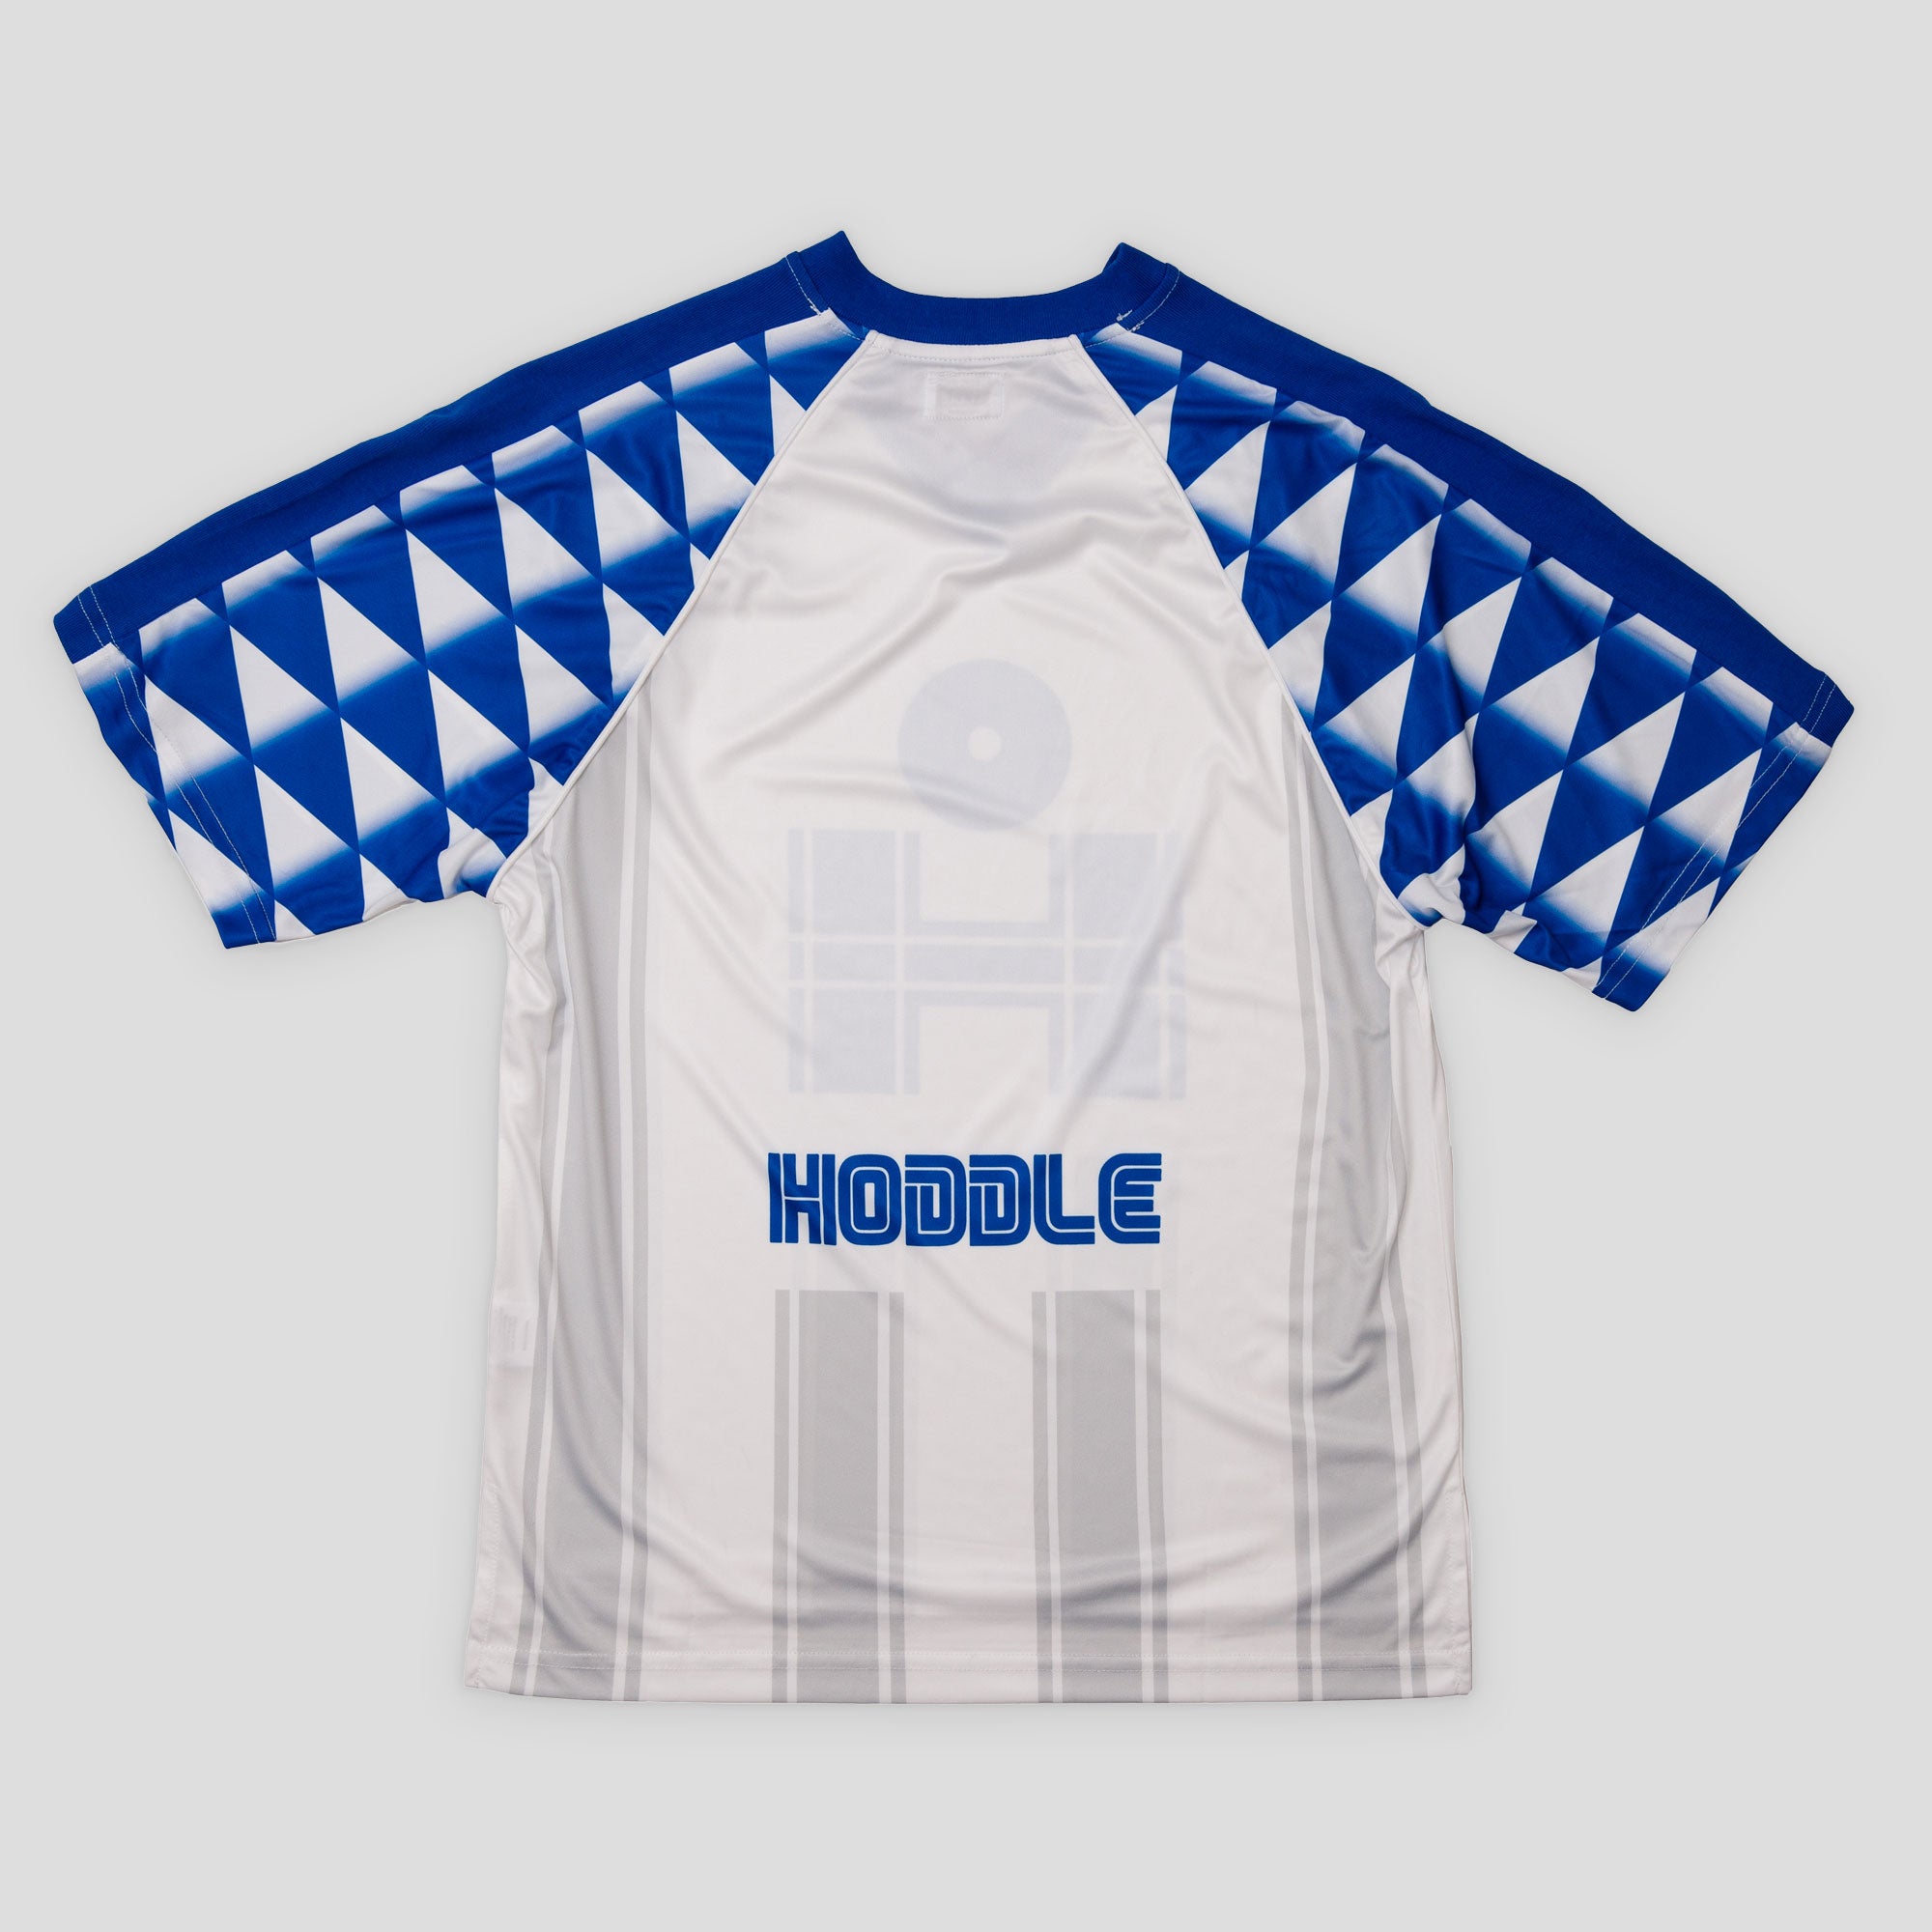 Hoddle Football Jersey - Blue